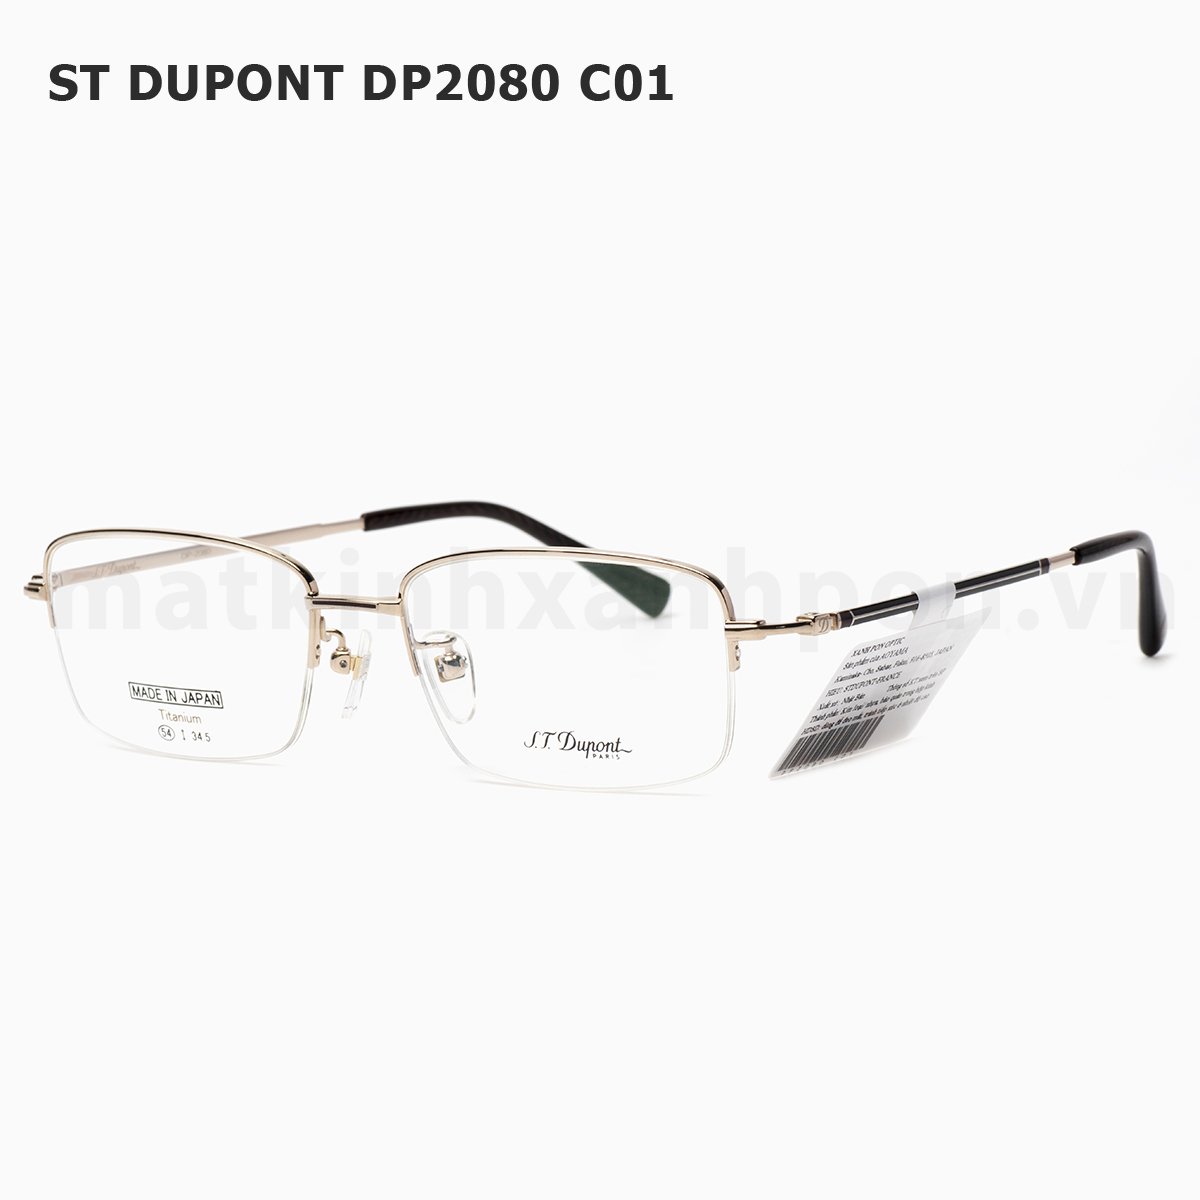 ST Dupont DP2080 C01